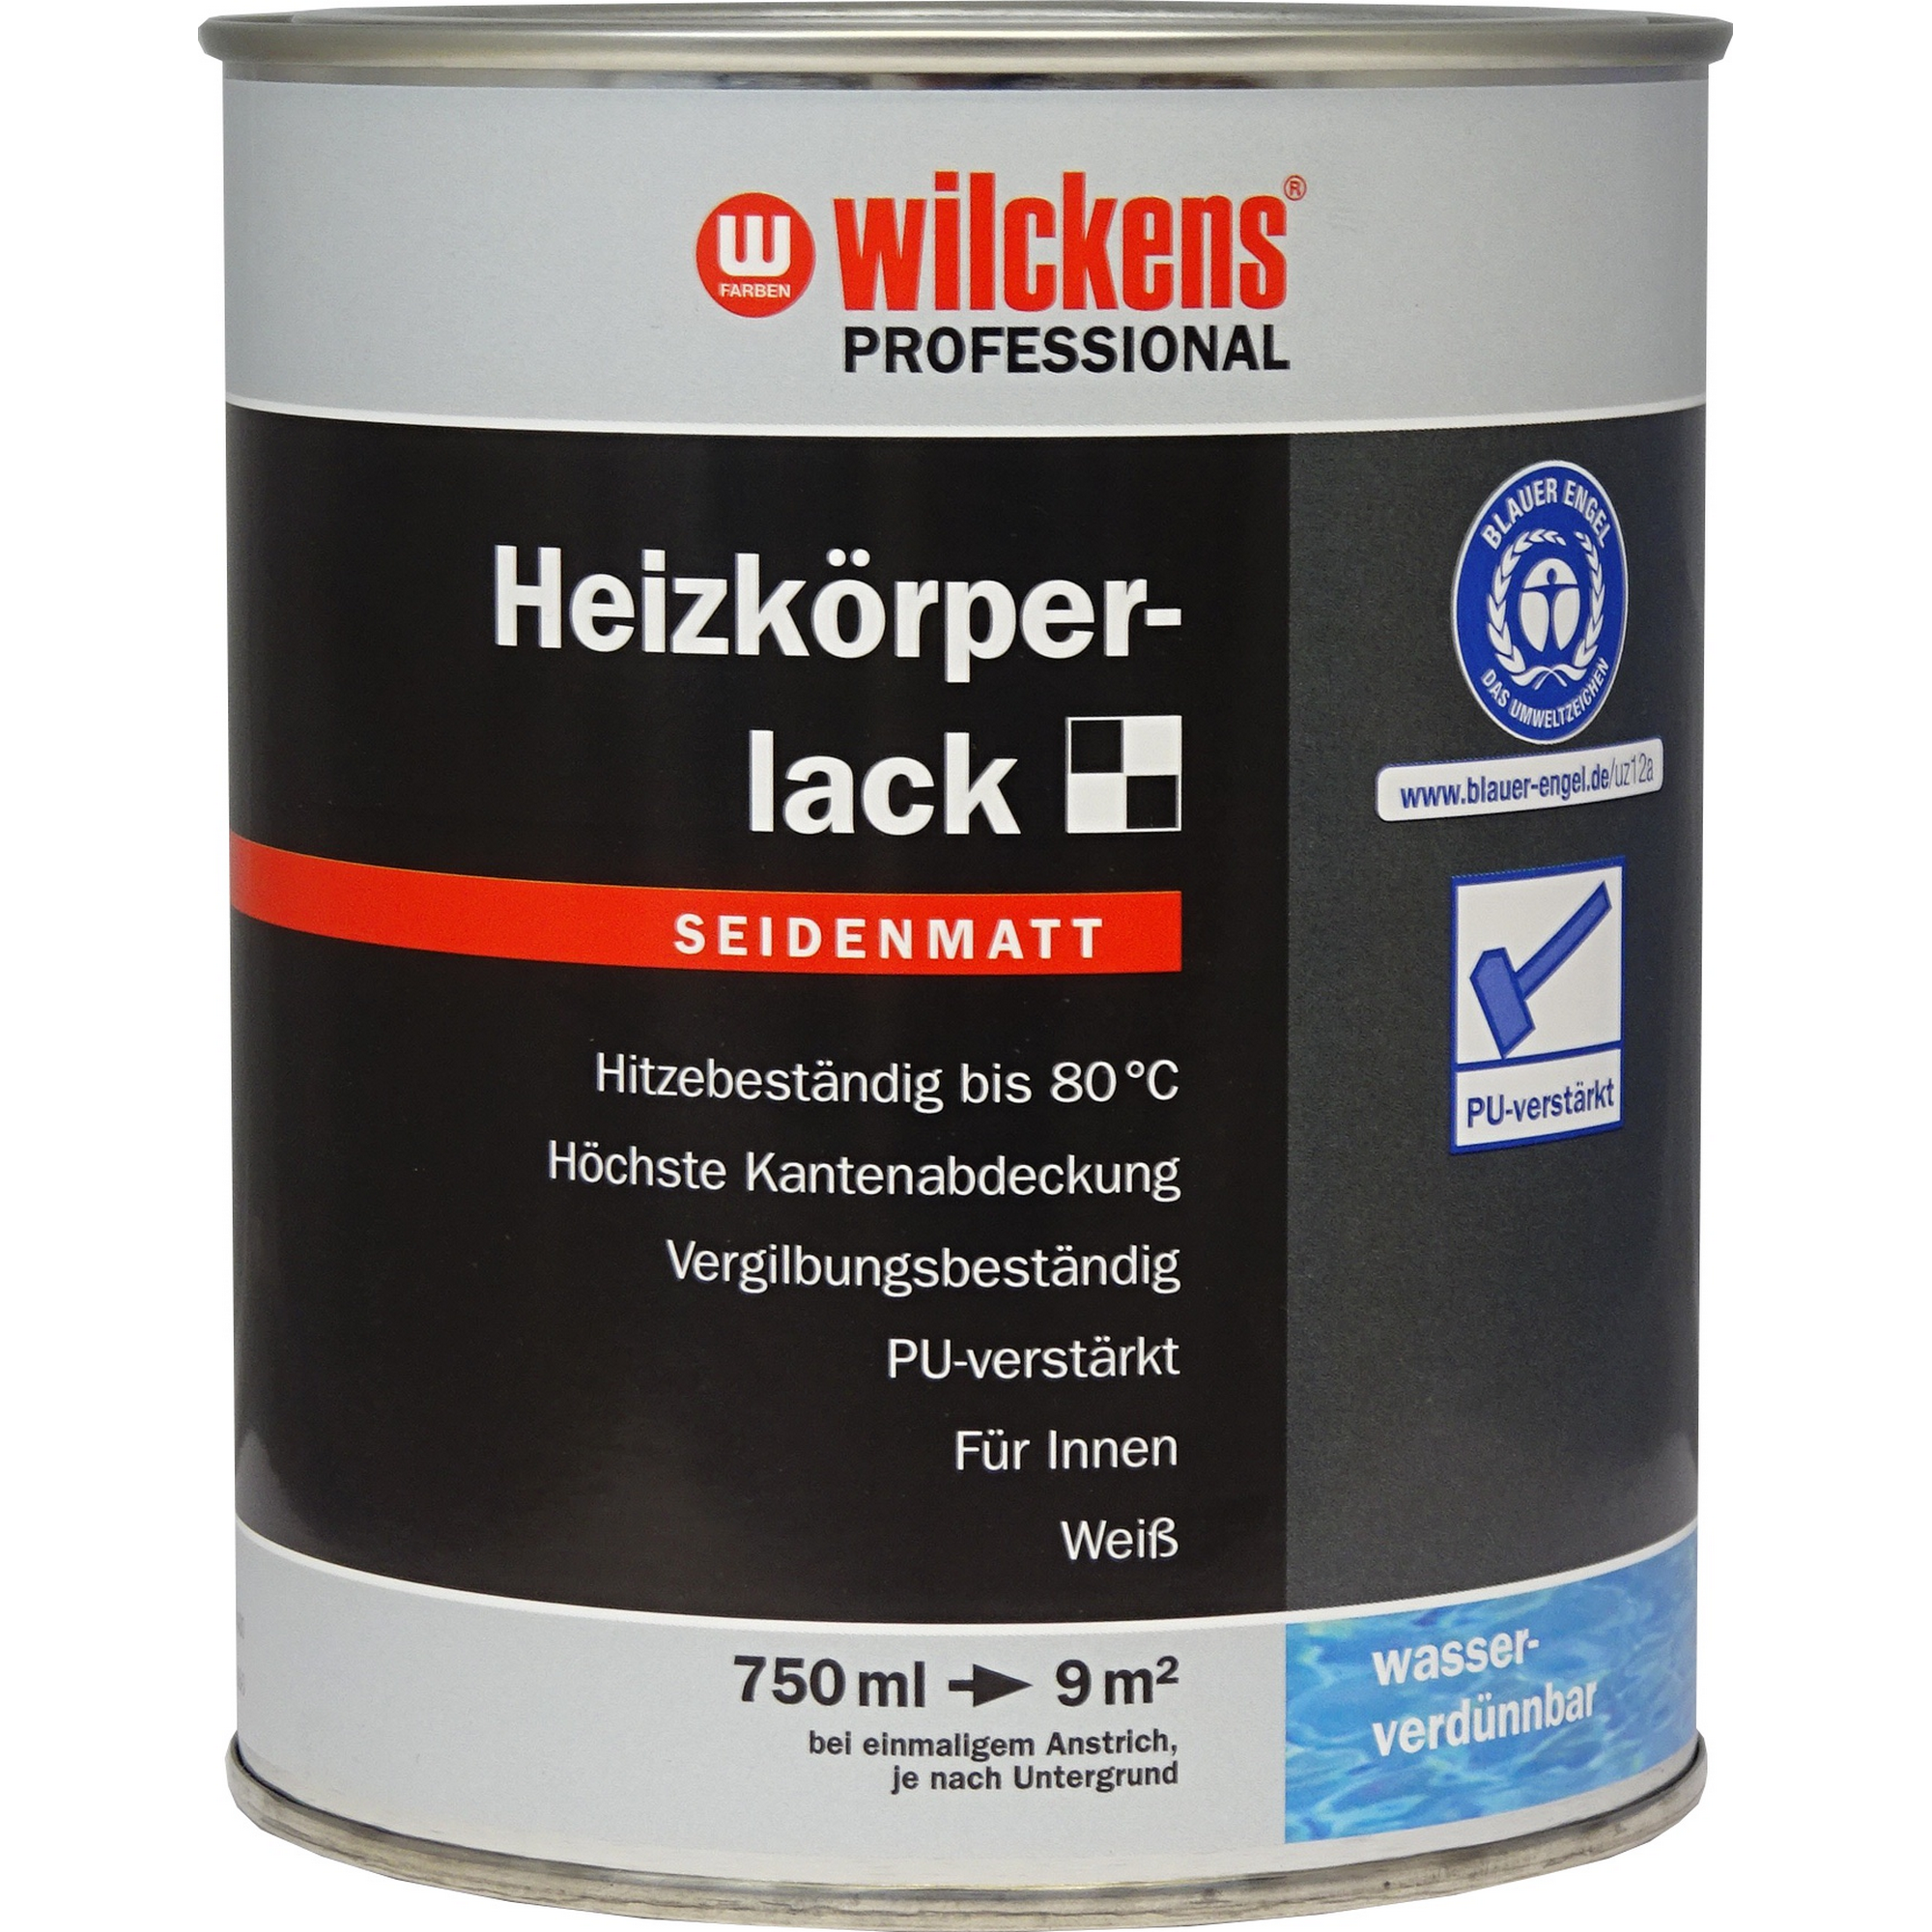 Heizkörperlack 'Professional' weiß seidenmatt 750 ml + product picture